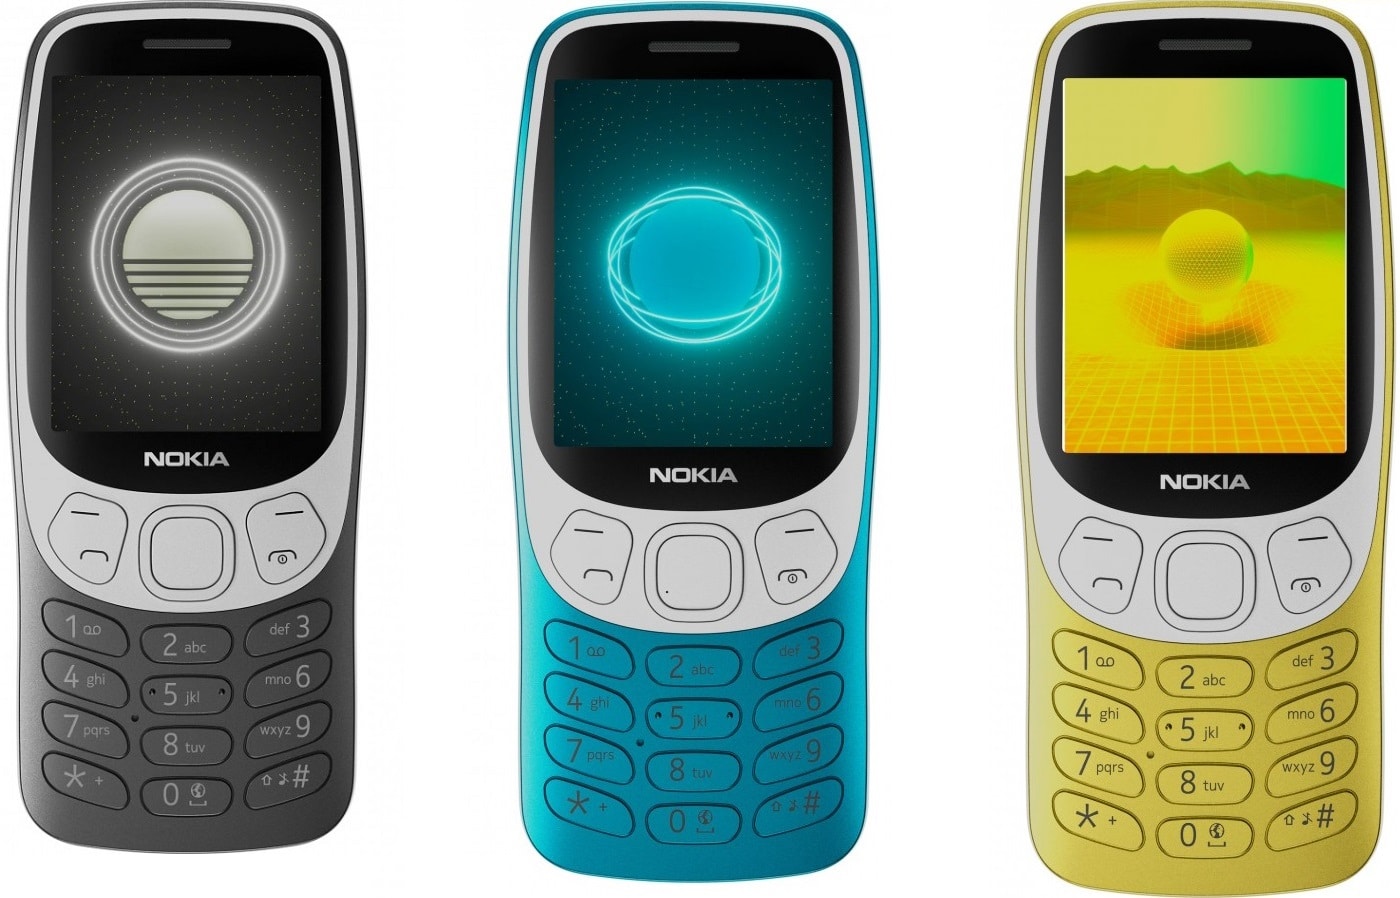 Farben des Nokia 3210